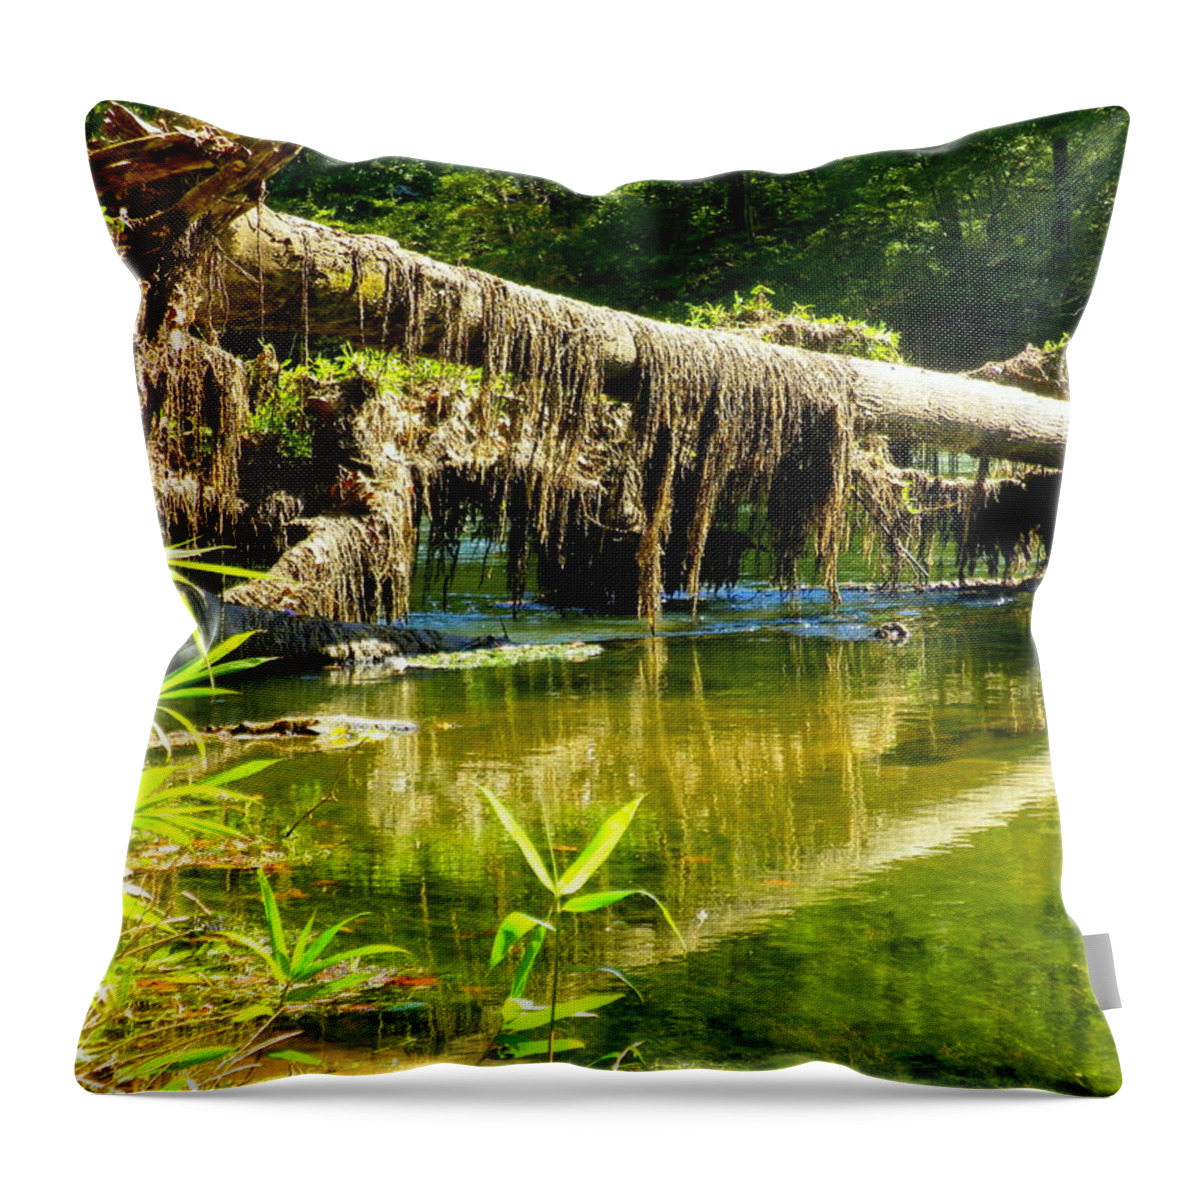 Moss Throw Pillow featuring the photograph Mossy Oak by Lisa Wooten